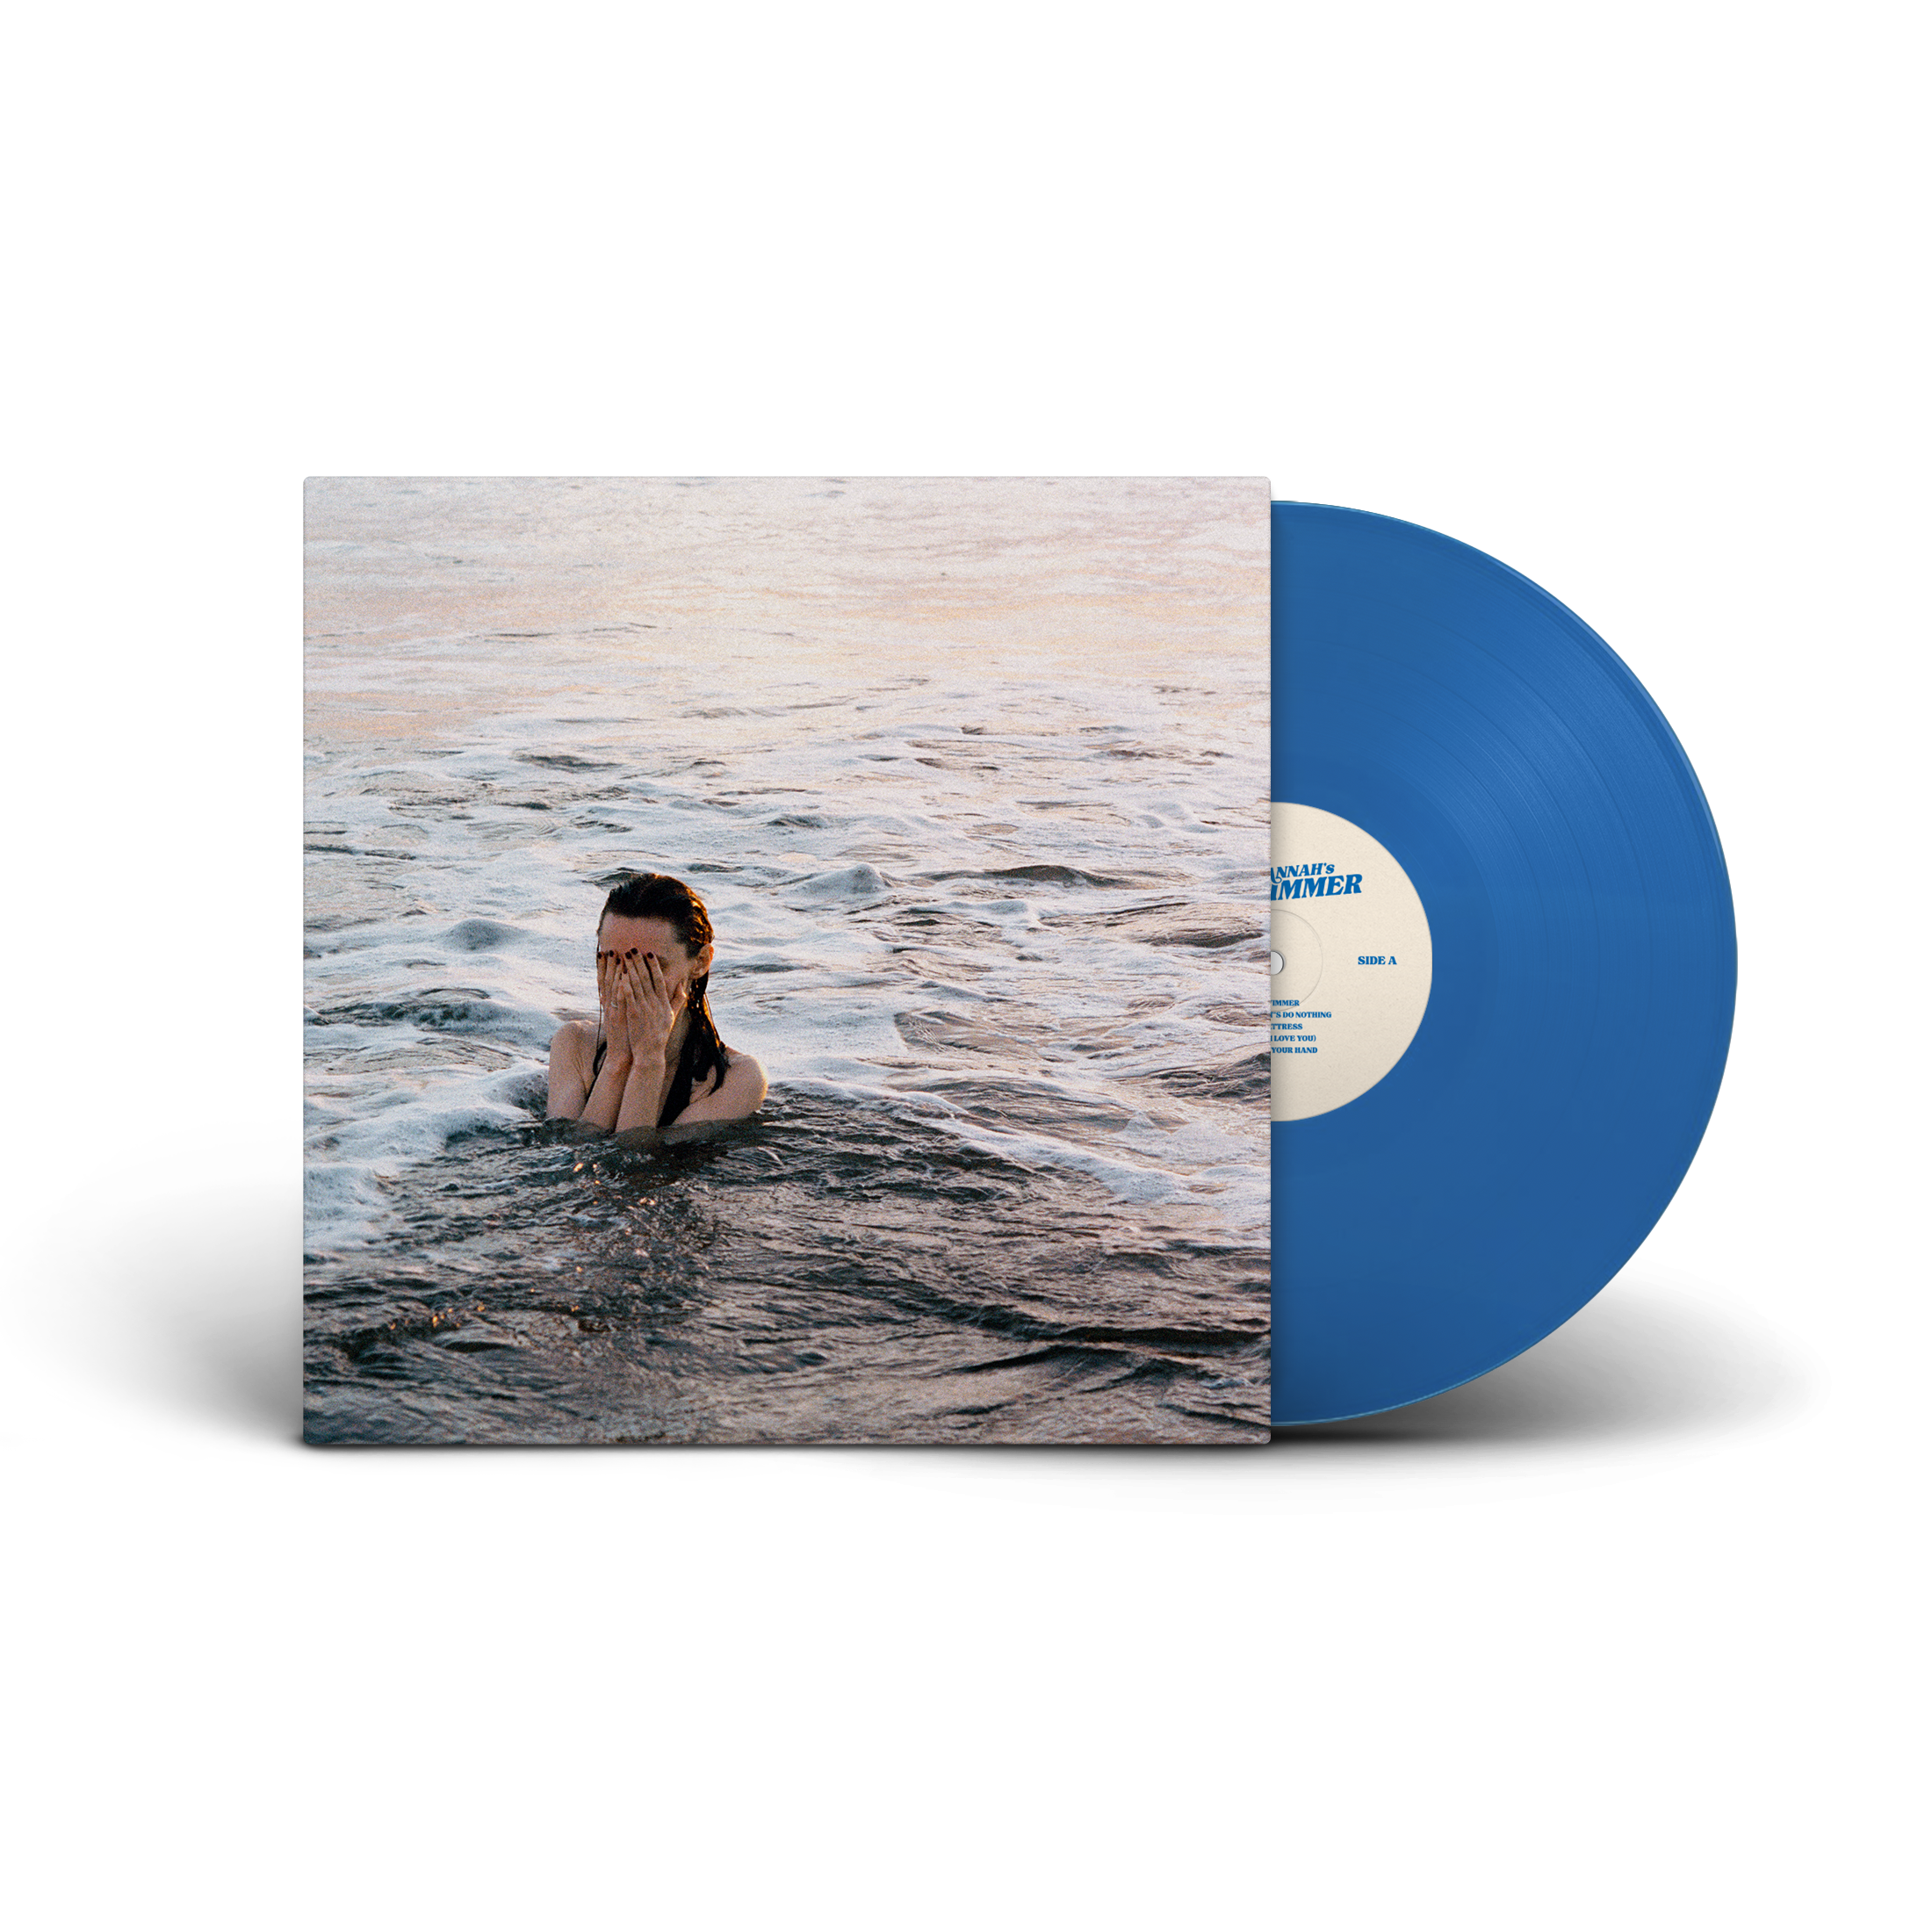 King Hannah - Big Swimmer: Limited 'Ocean Blue' Vinyl LP + Lyric Sheet